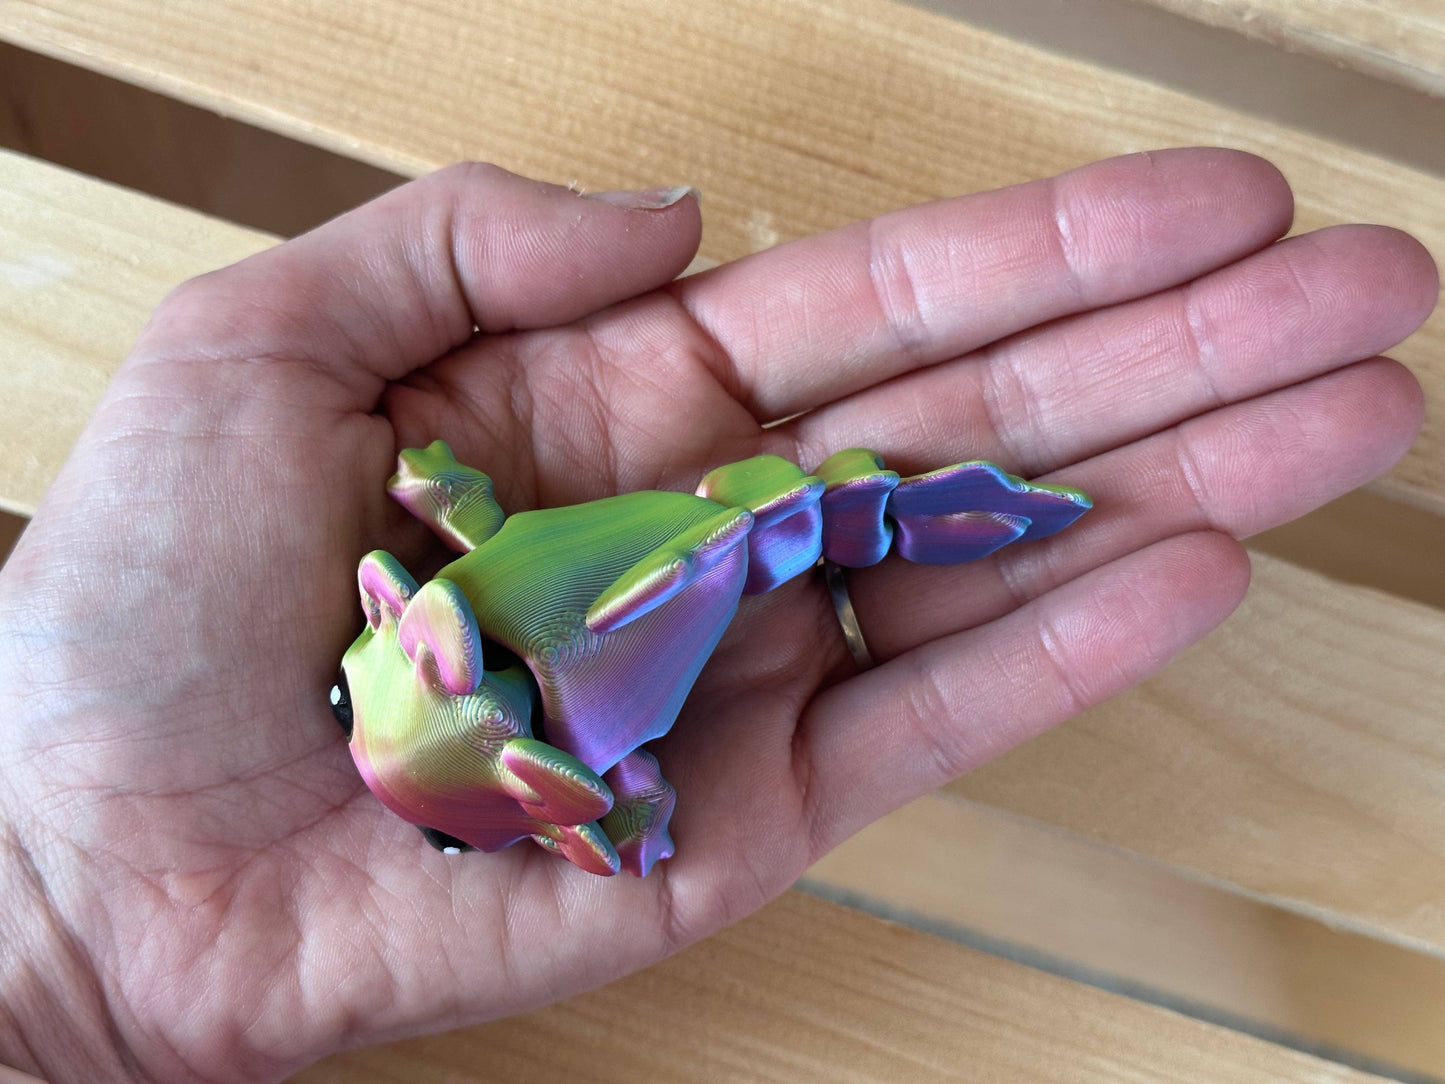 3D Printed Axolotl Tadpole: Small